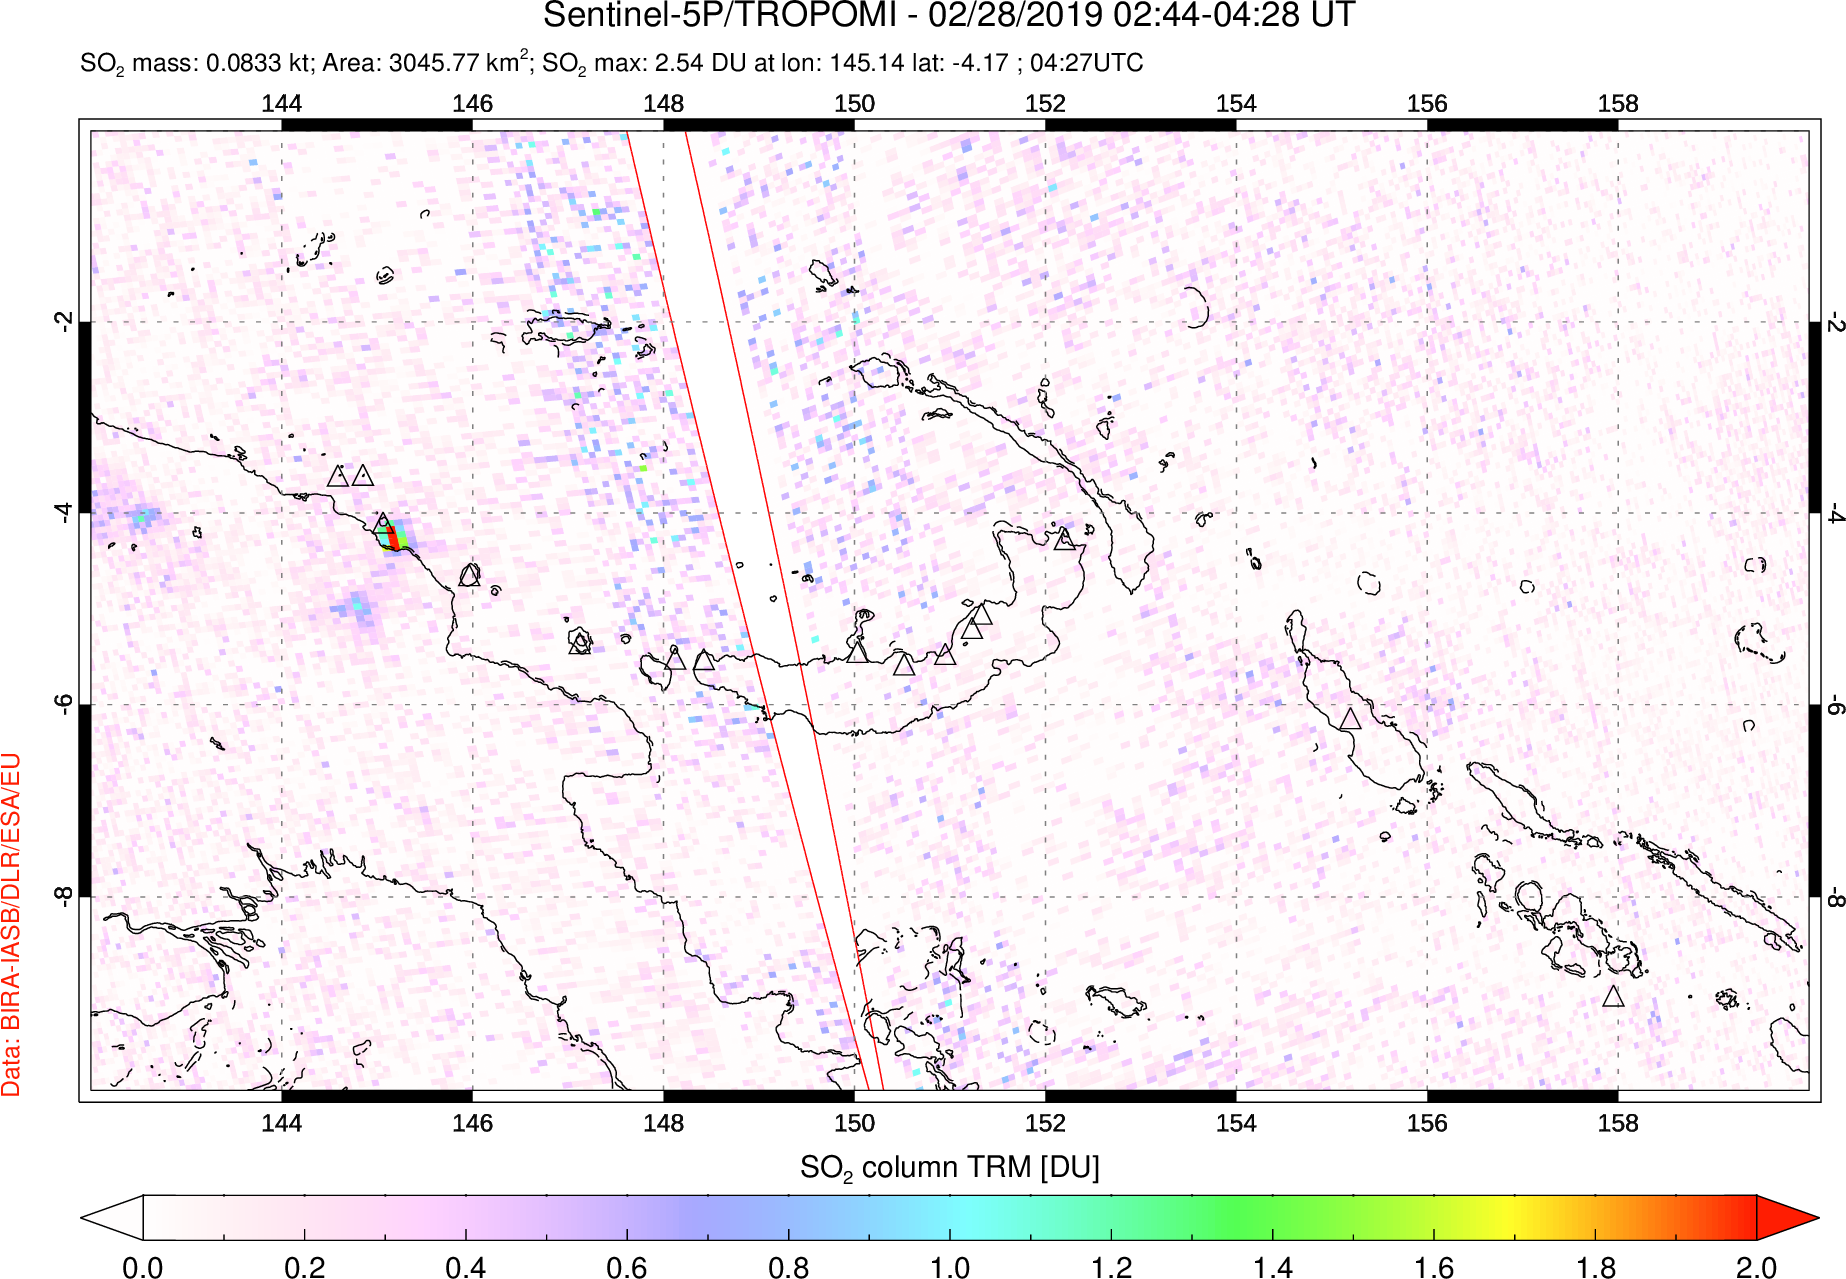 A sulfur dioxide image over Papua, New Guinea on Feb 28, 2019.